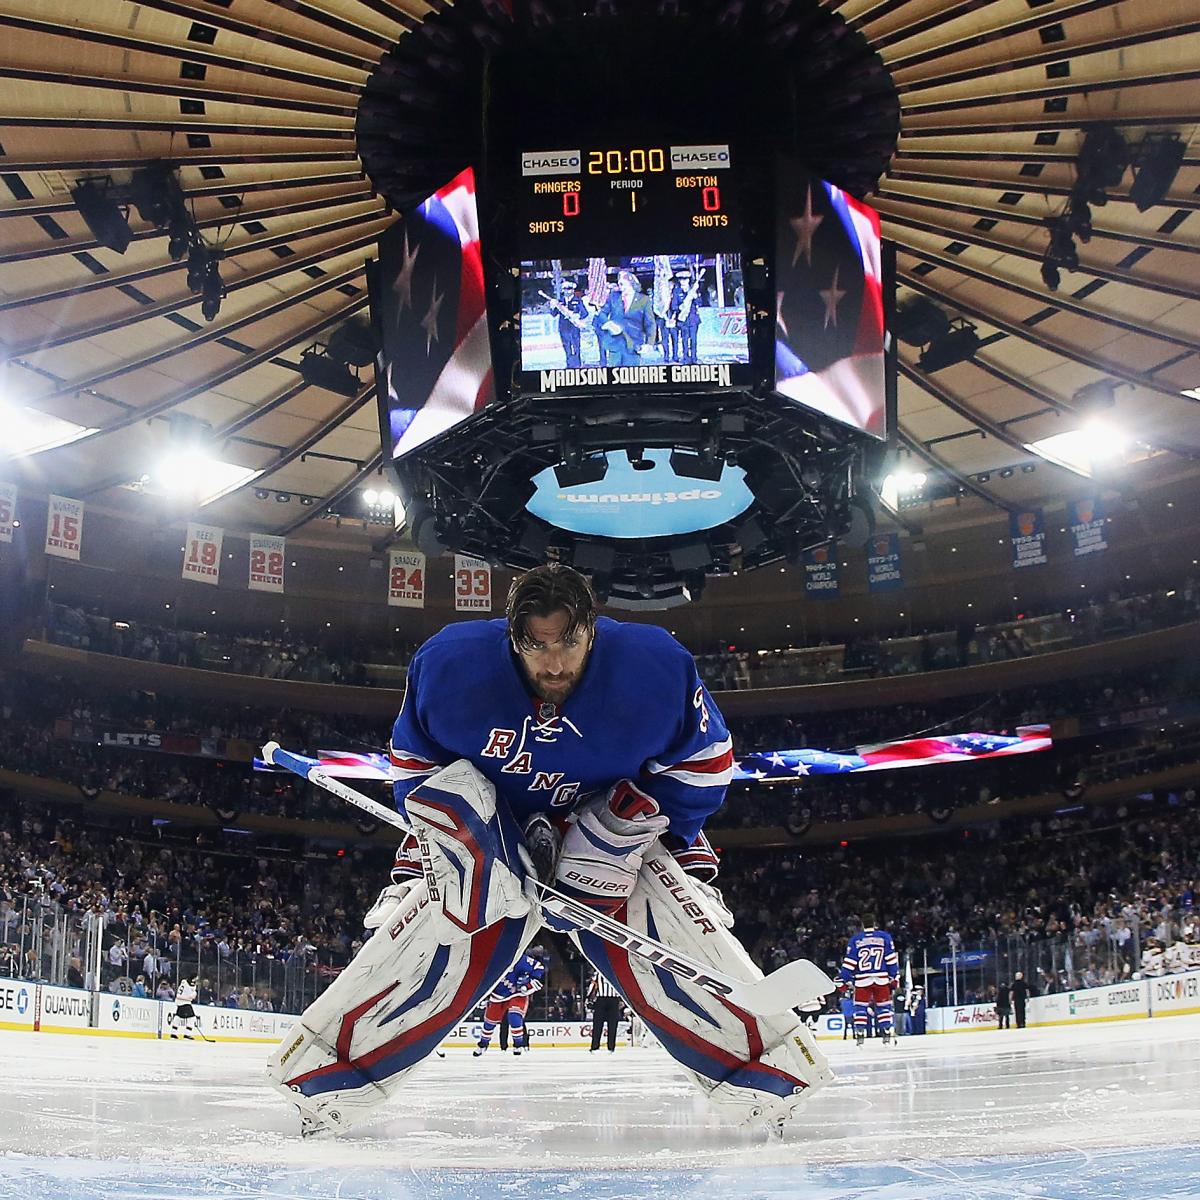 New York Rangers: MSG featuring memorable Garden debuts this week